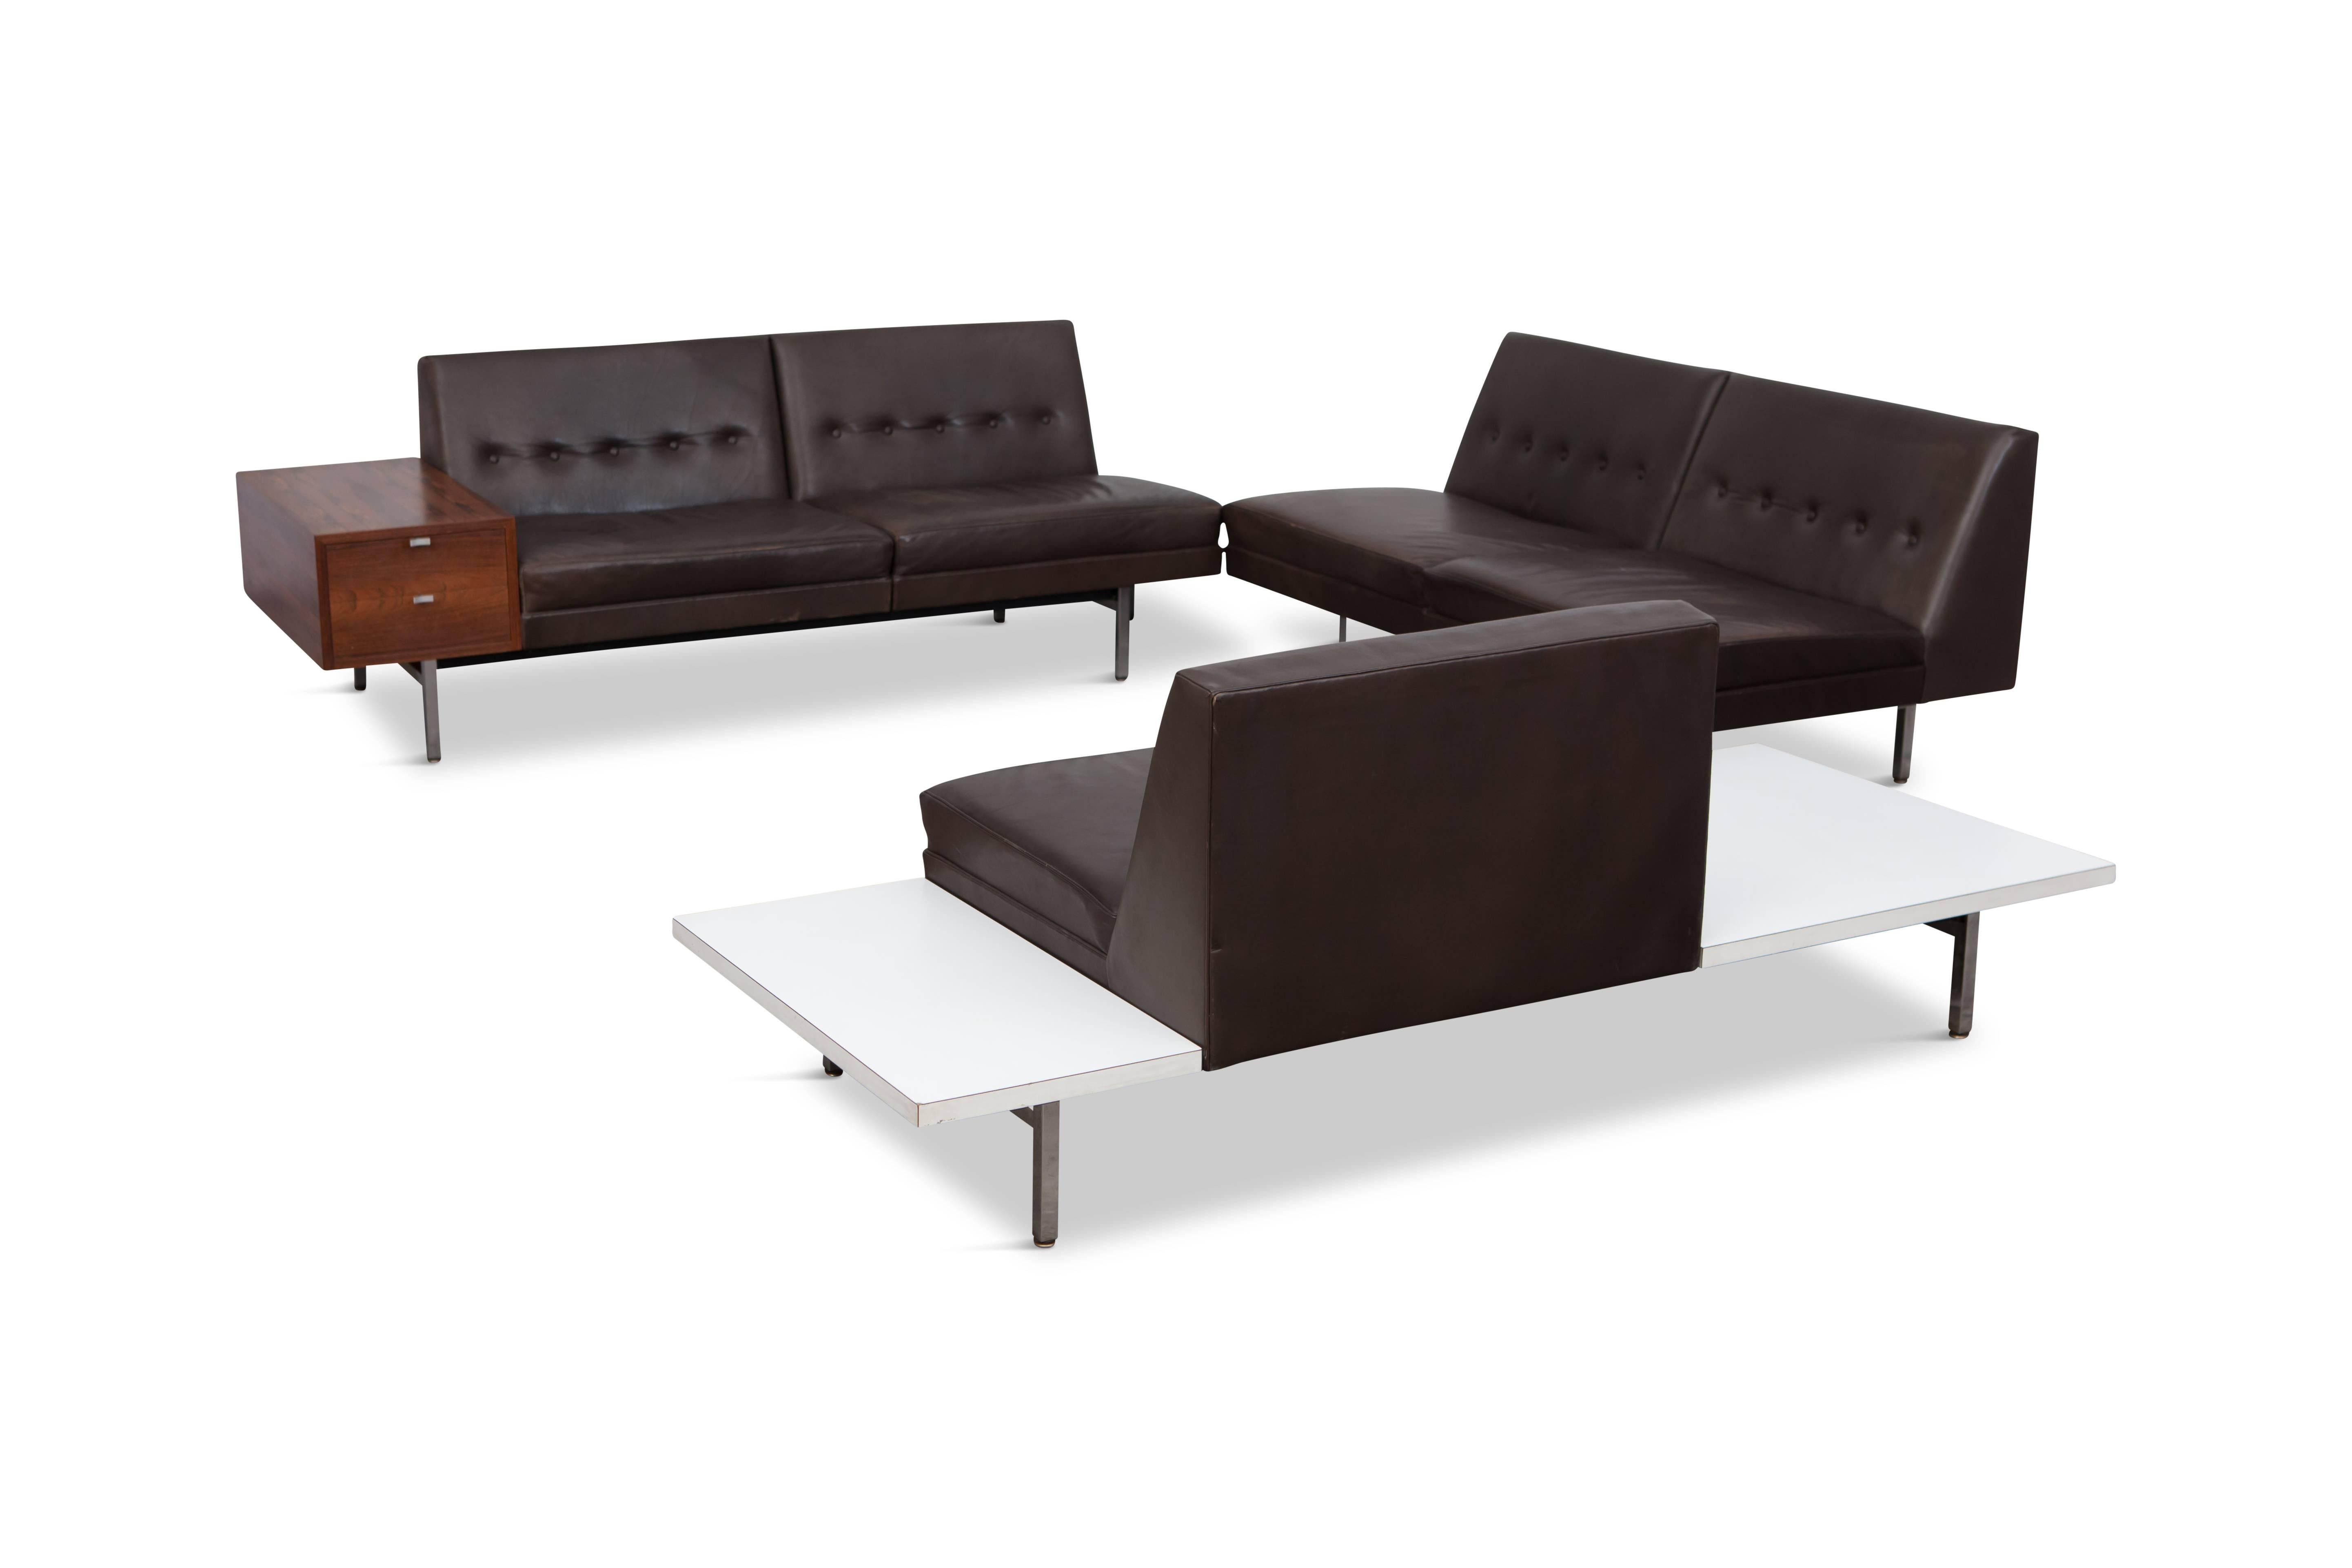 George Nelson Modular Sofa in Dark Leather for Herman Miller 1